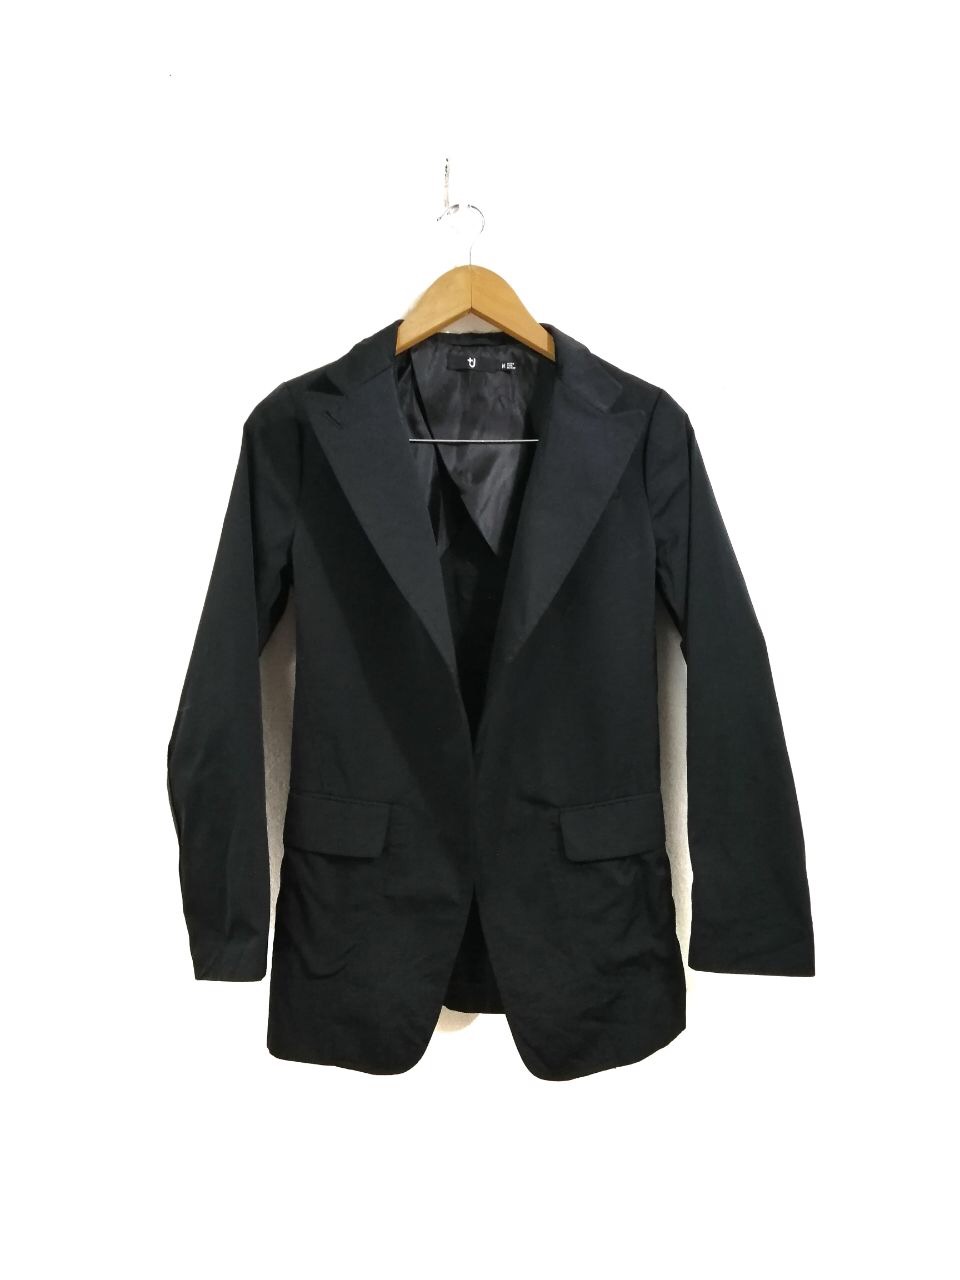 Jil Sander X Uniqlo Style Coat/Jacket Design 19 - 1